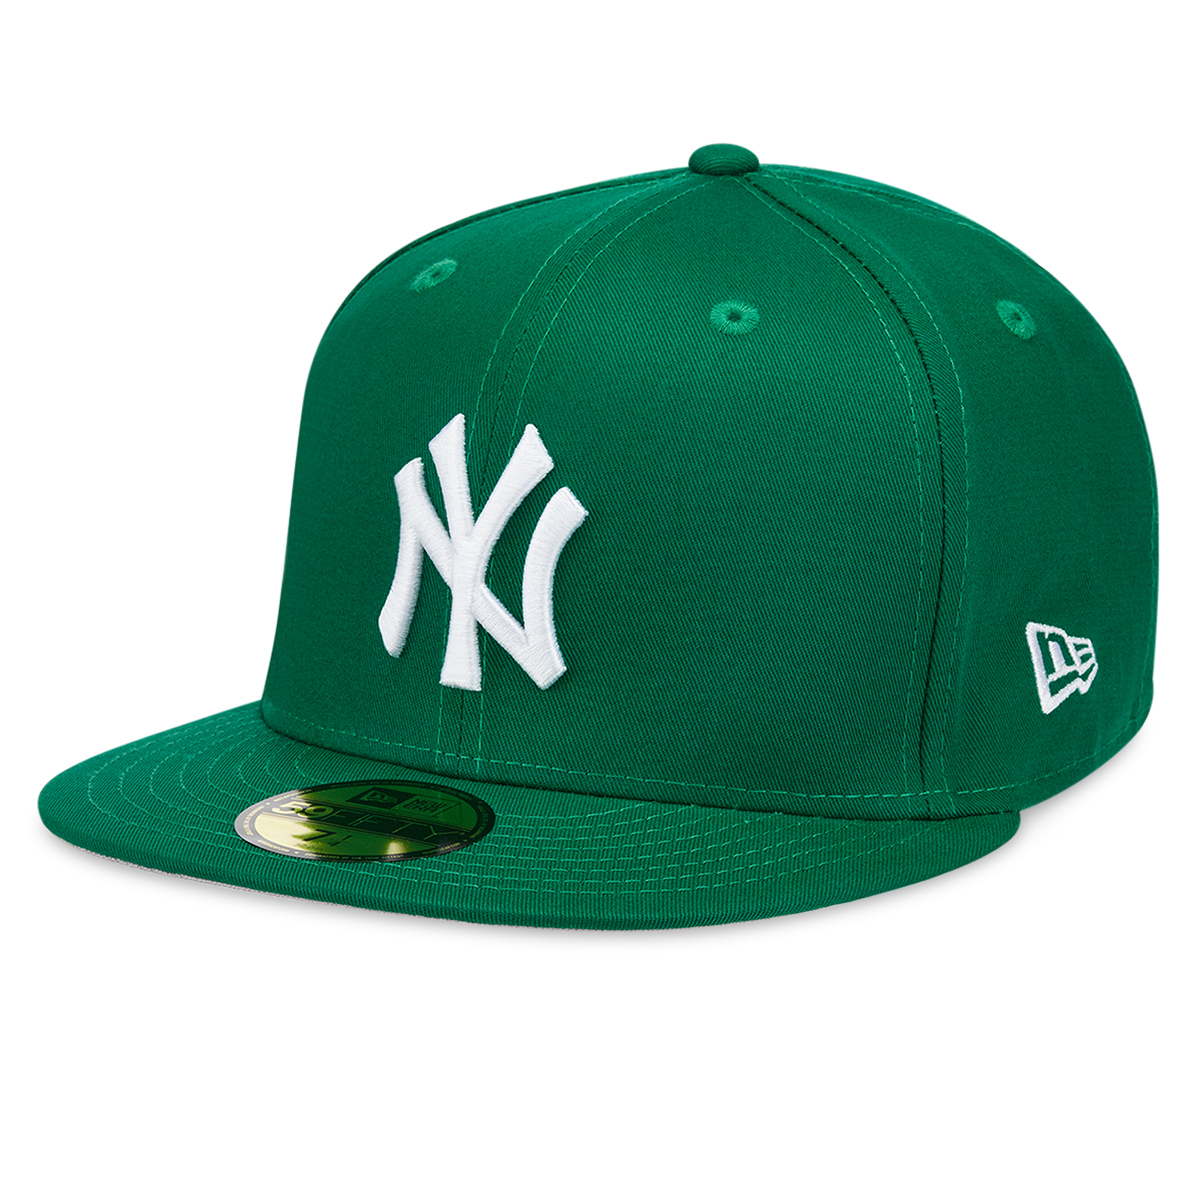 Buy MLB NEW YORK YANKEES PATTYS 59FIFTY for EUR 35.95 on KICKZ.com!